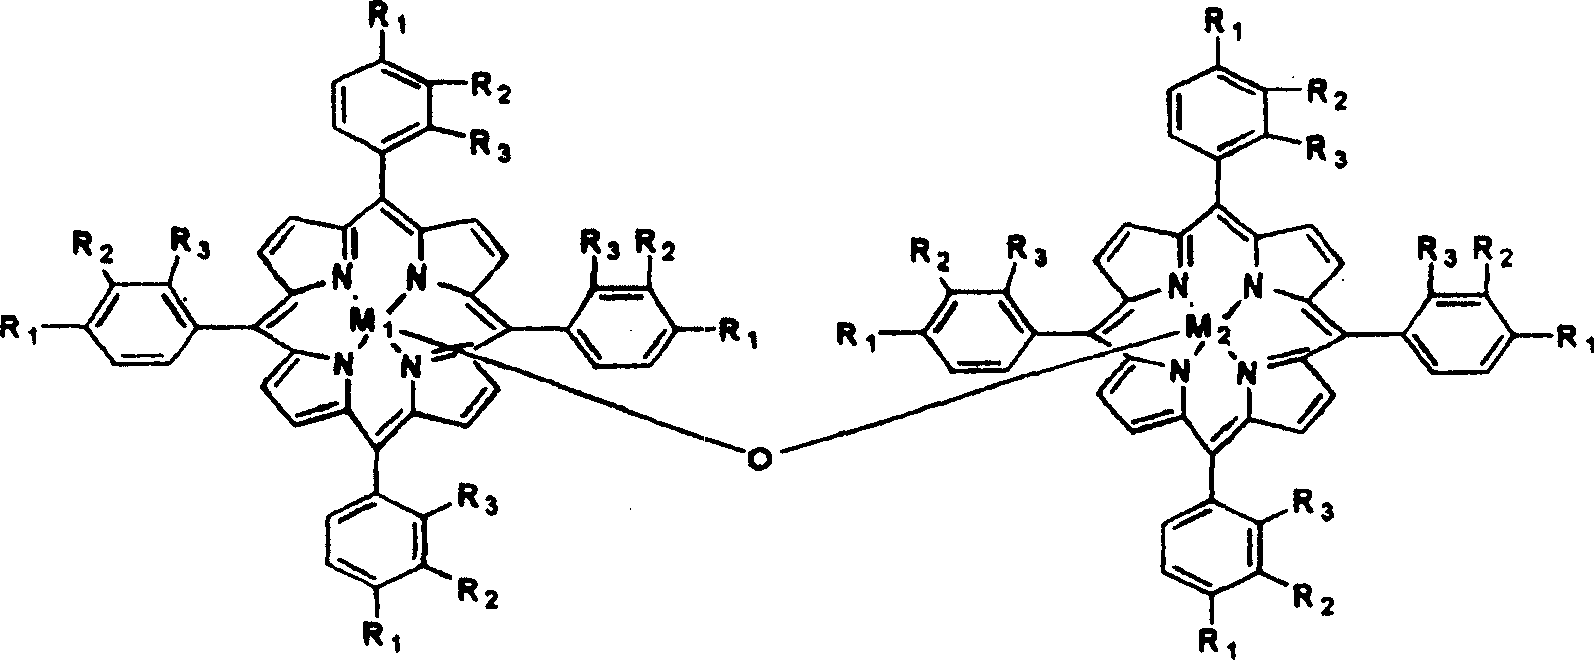 Method for preparing isopropyl benzene hydrogen peroxide by catalytically oxidizing isopropyl benzene